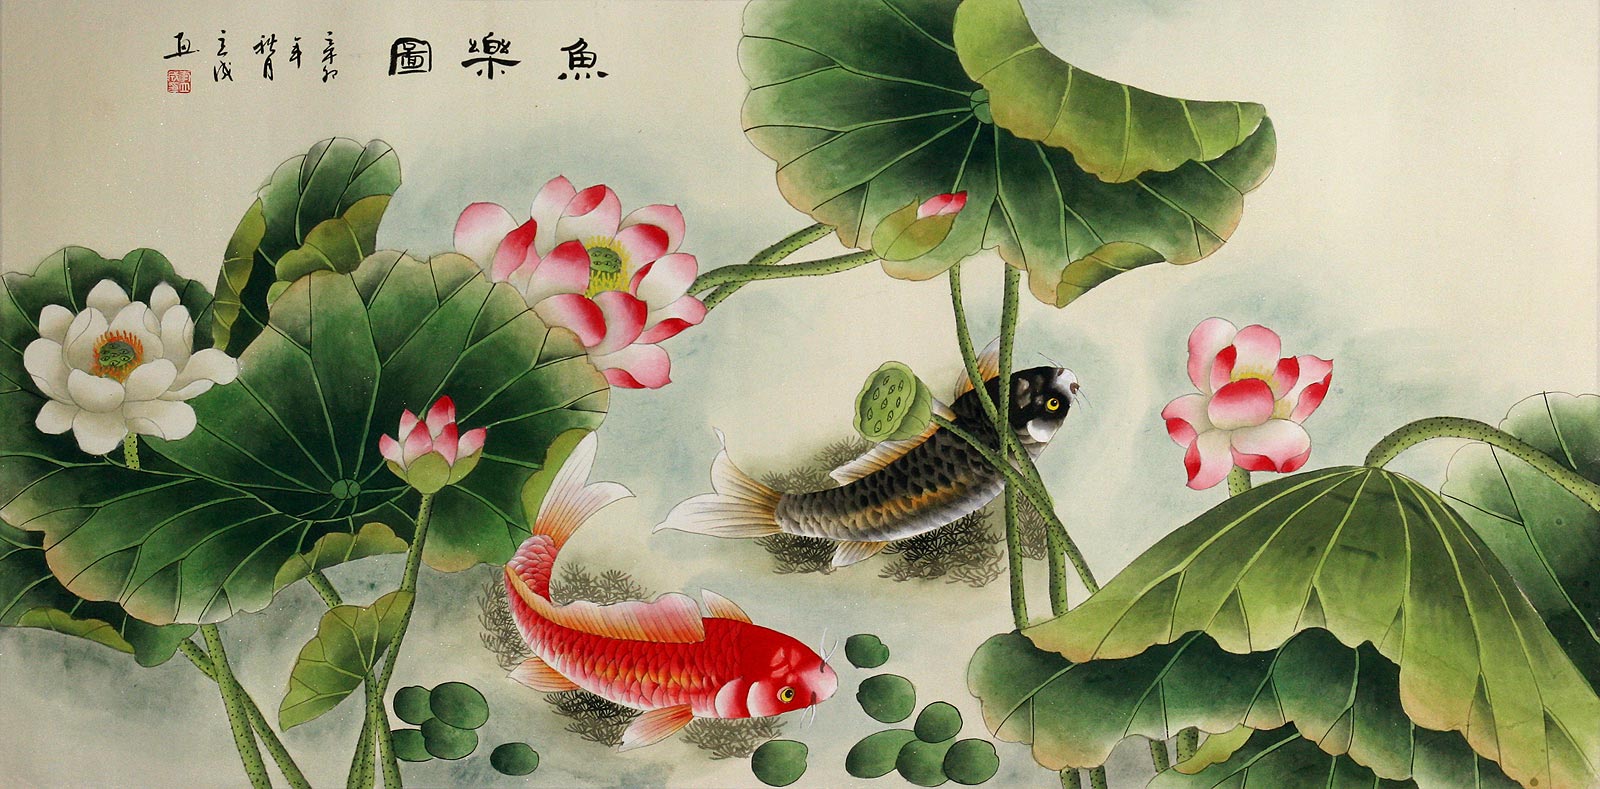 Koi Fish Having Fun in the Lotus Flowers - Large Painting